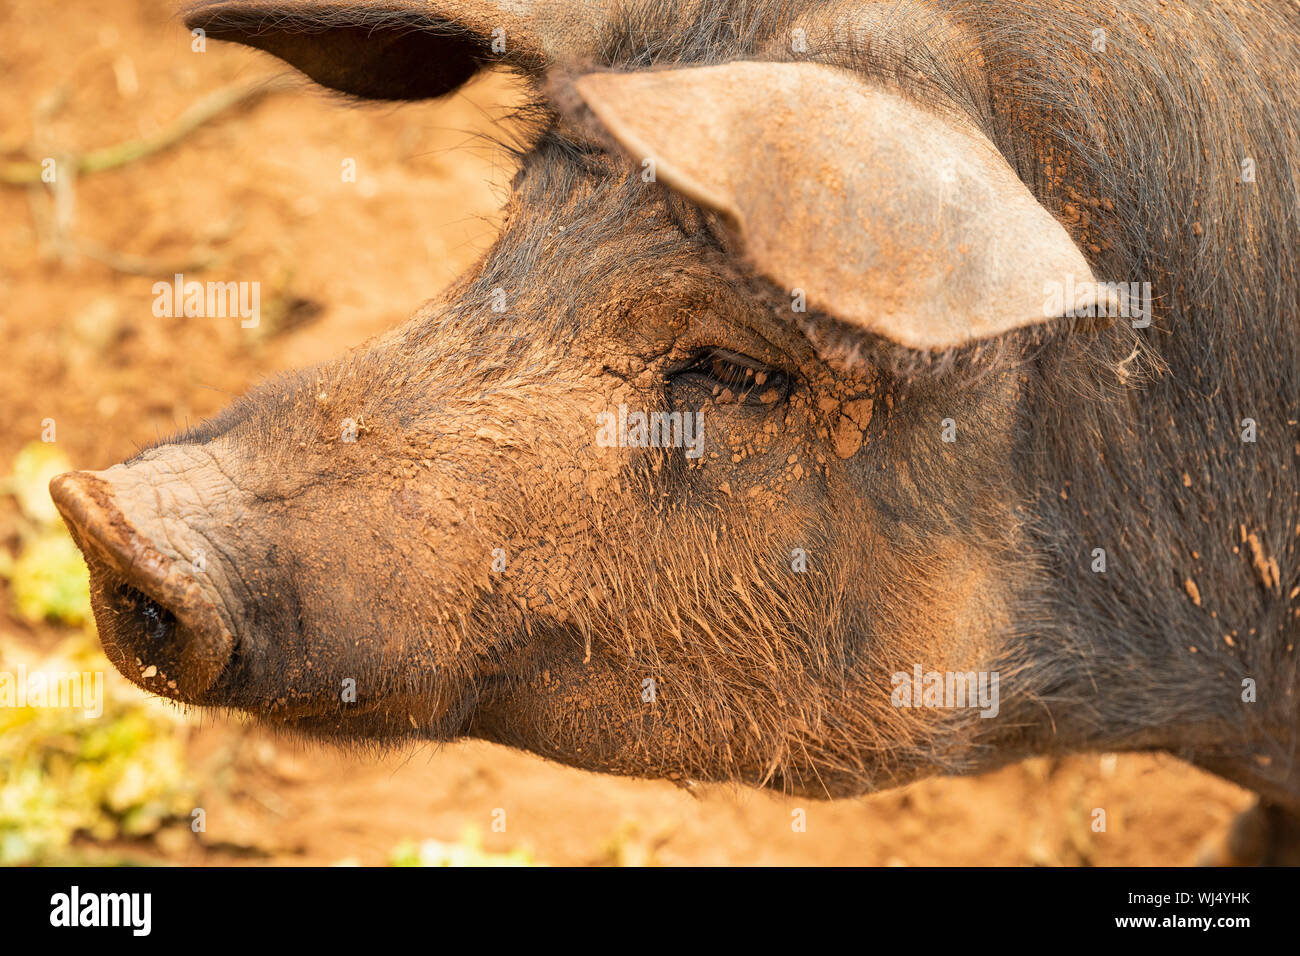 Close up profile muddy free range pig Stock Photo